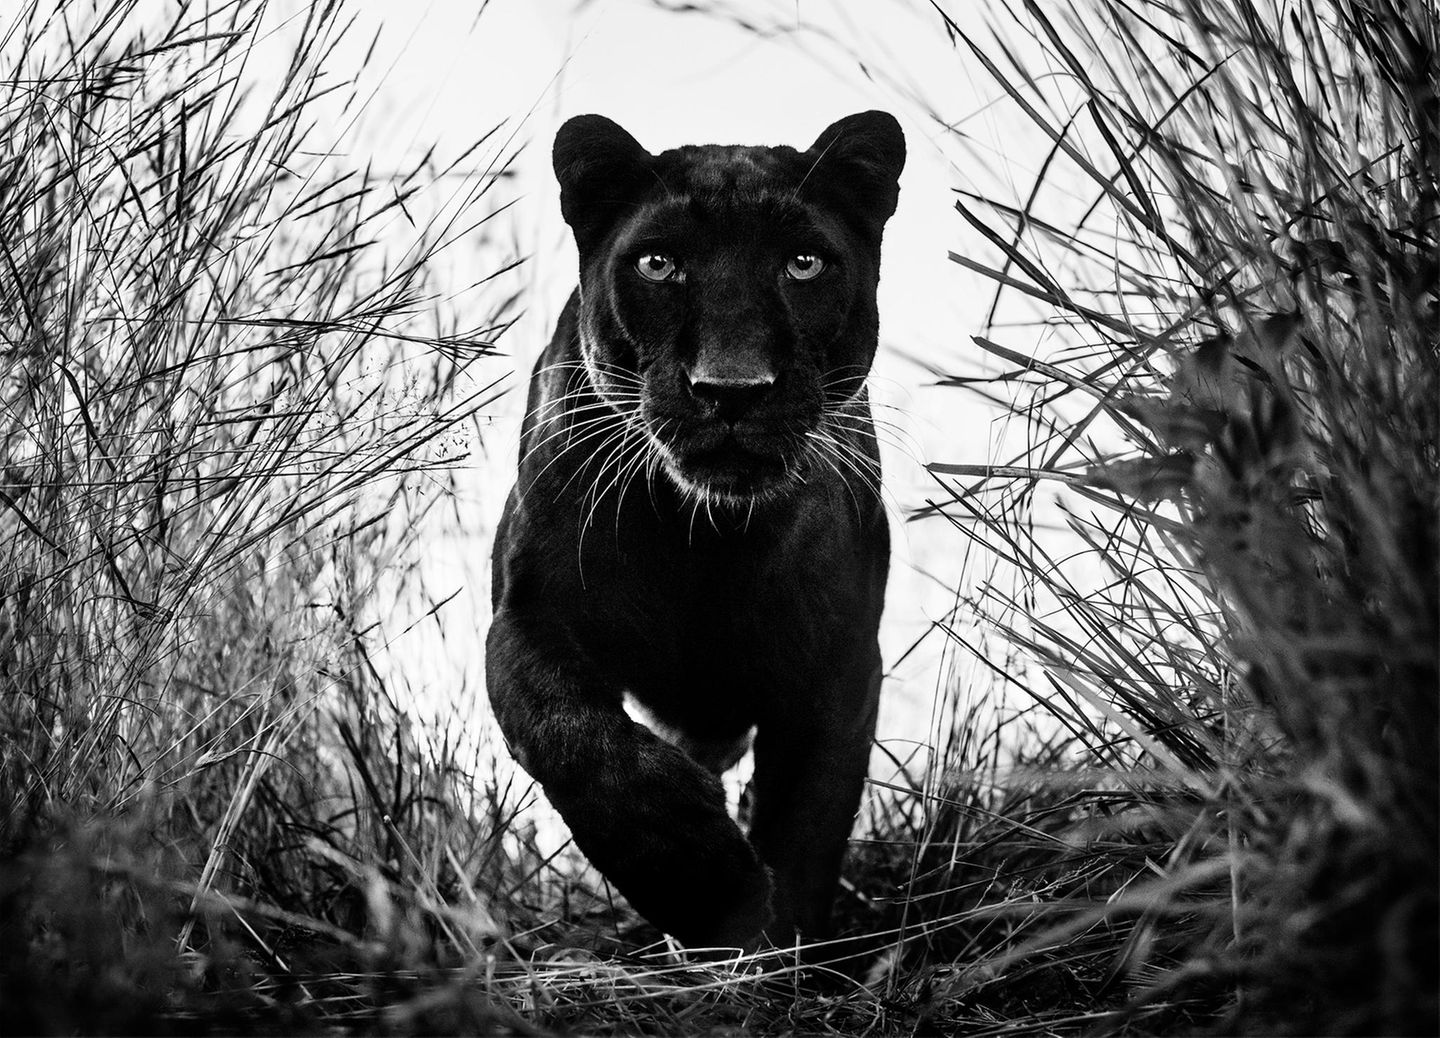 "Black Panther" by David Yarrow